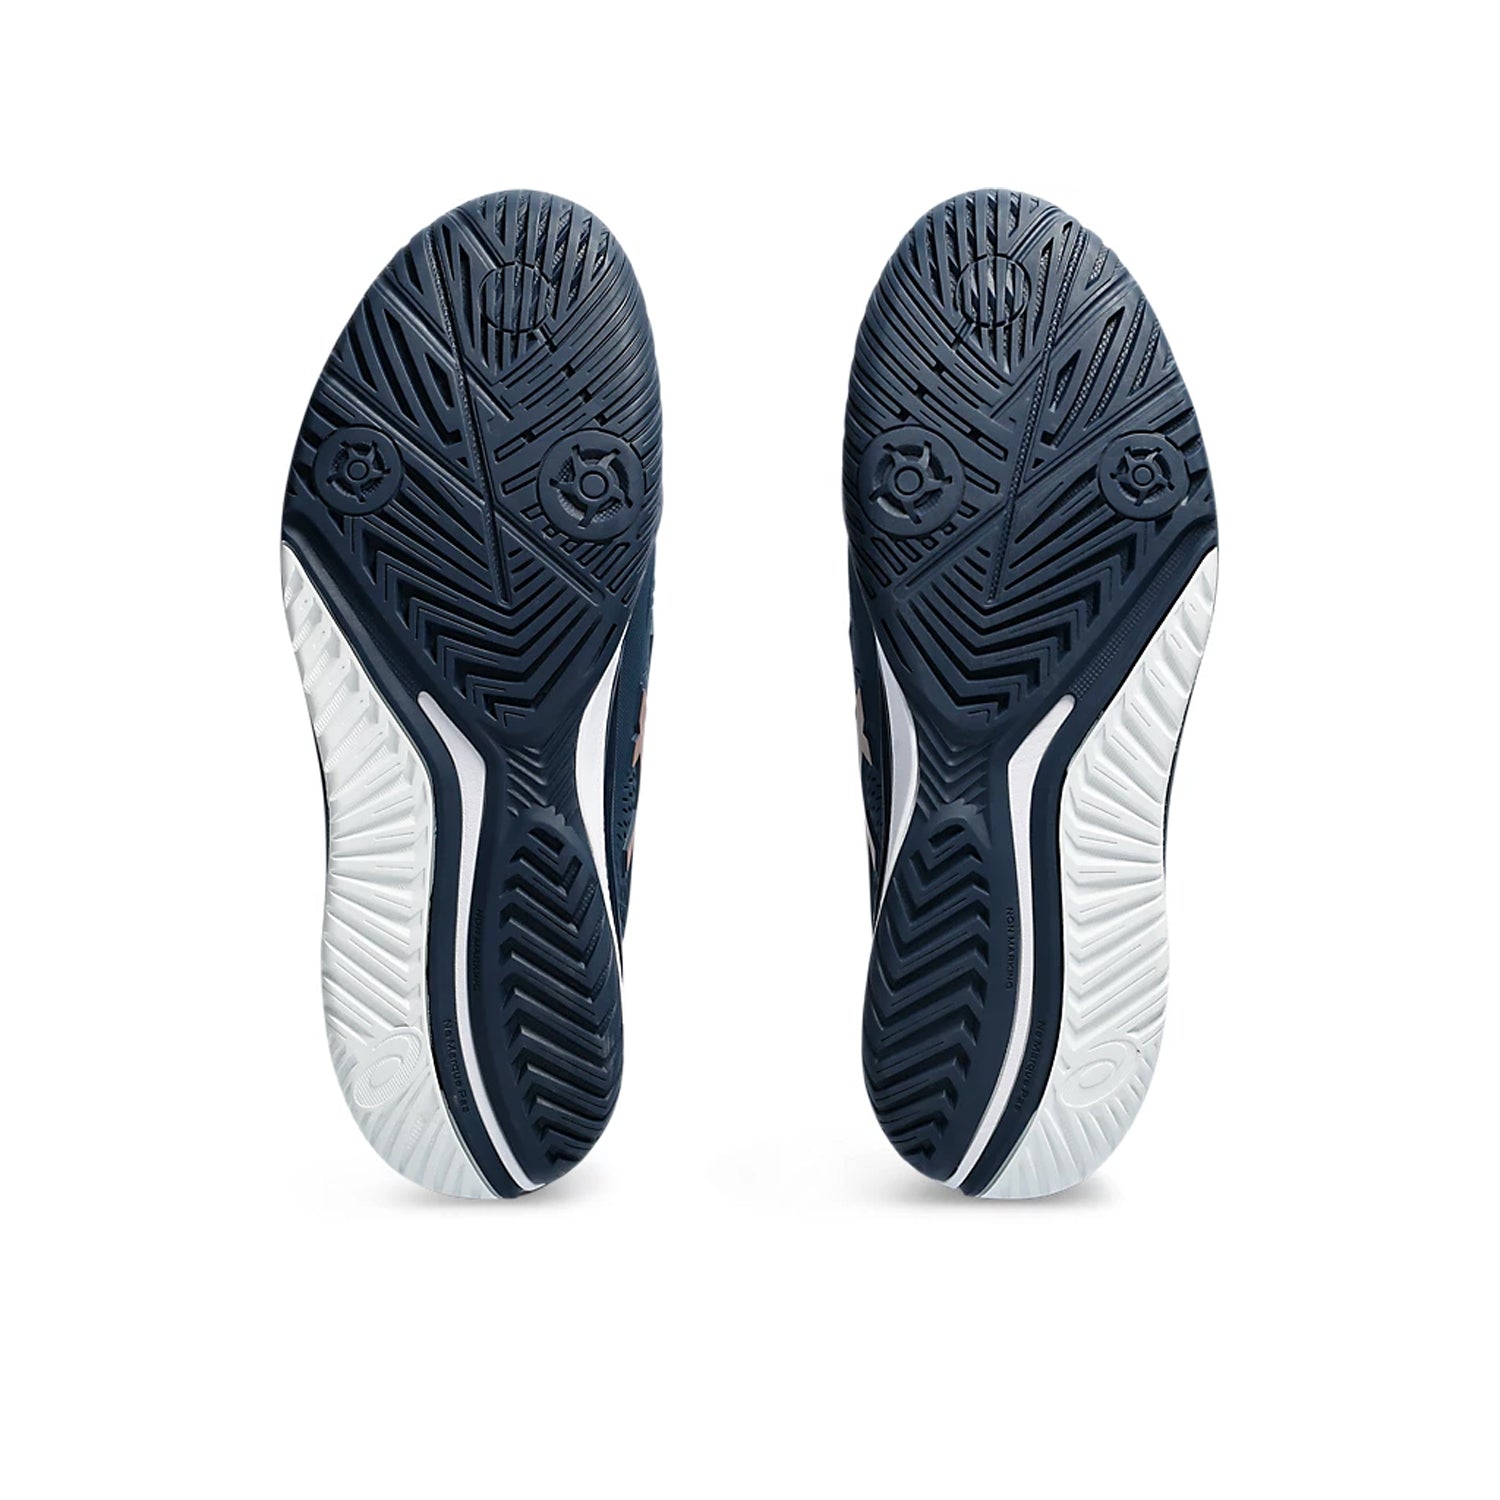 Asics Gel-Resolution 9 Men's New Tennis Shoes - Best Price online Prokicksports.com